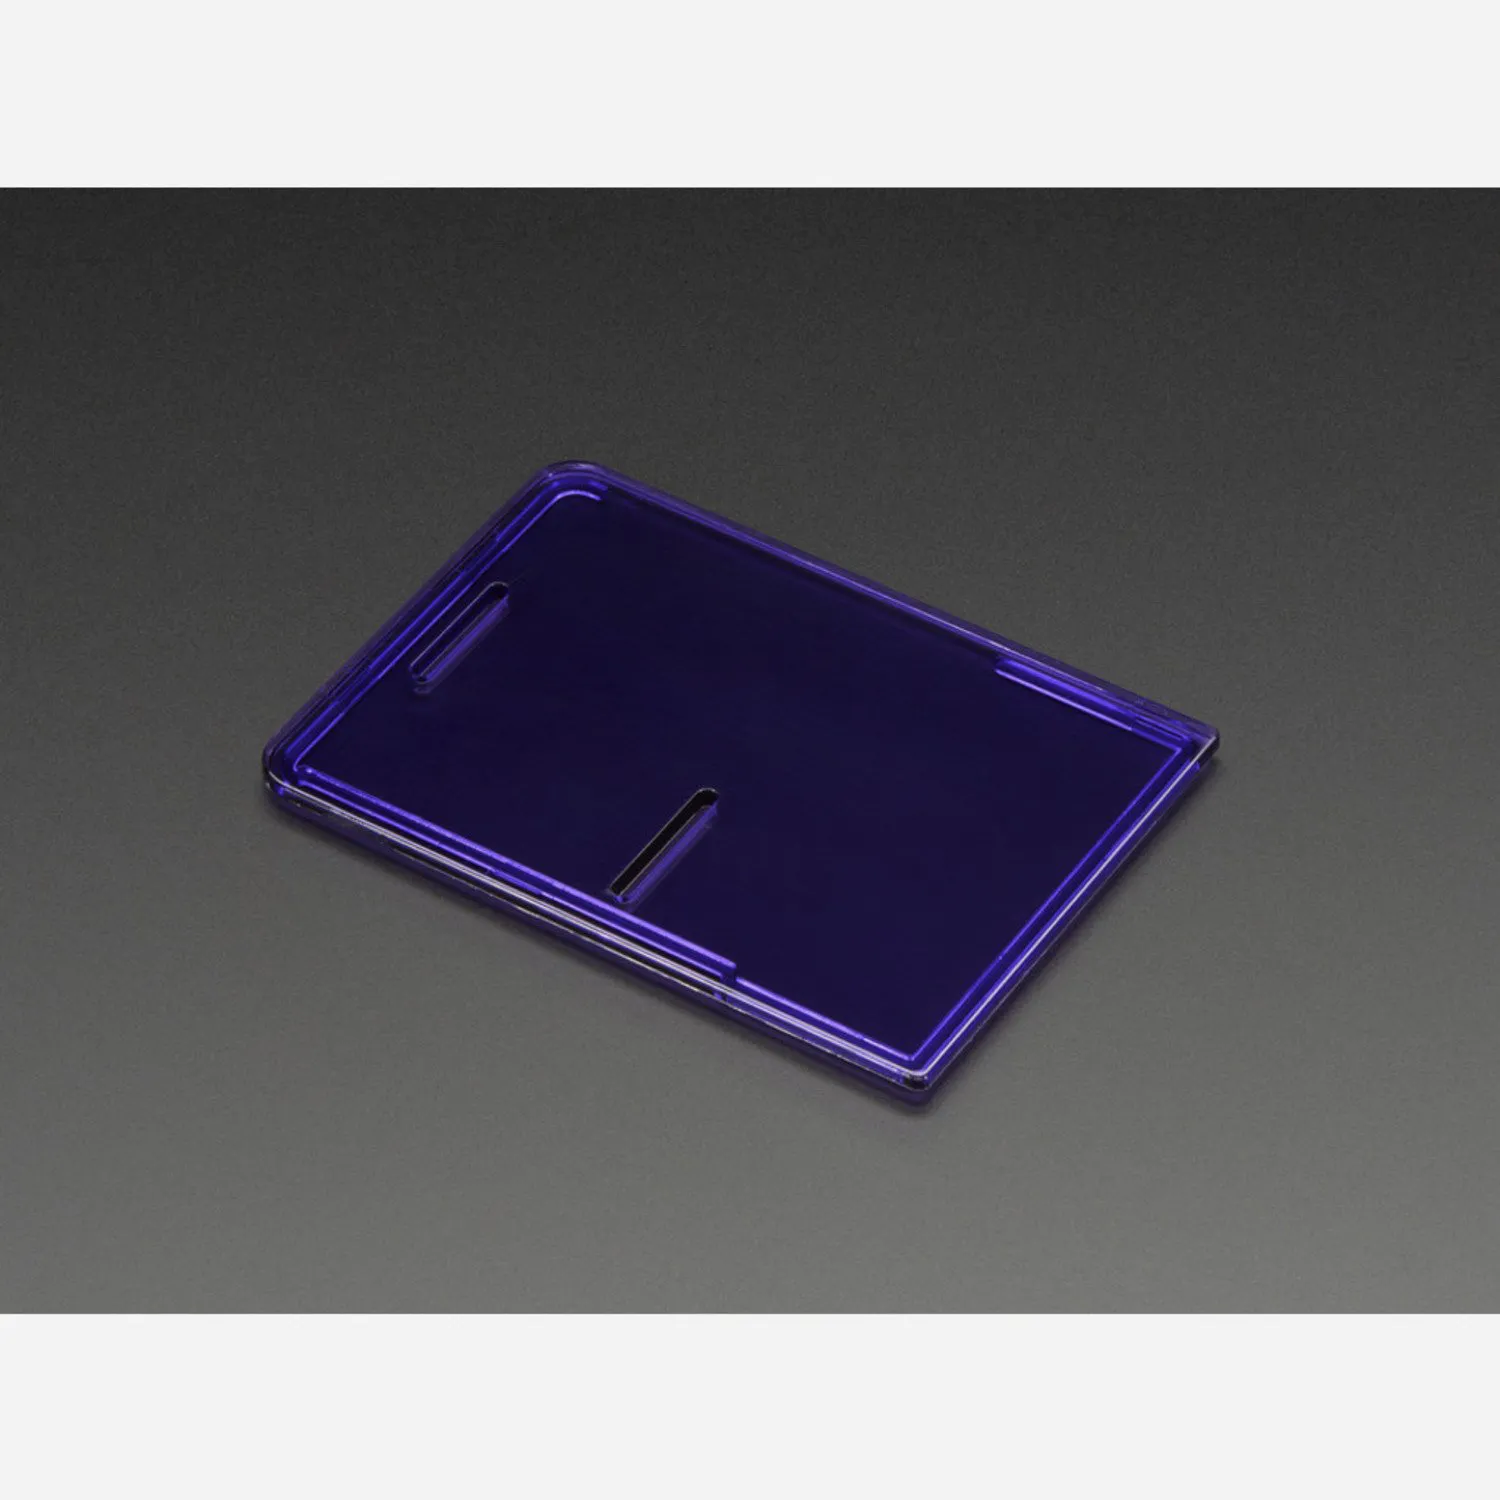 Photo of Raspberry Pi Model B+ / Pi 2 / Pi 3 Case Lid - Purple